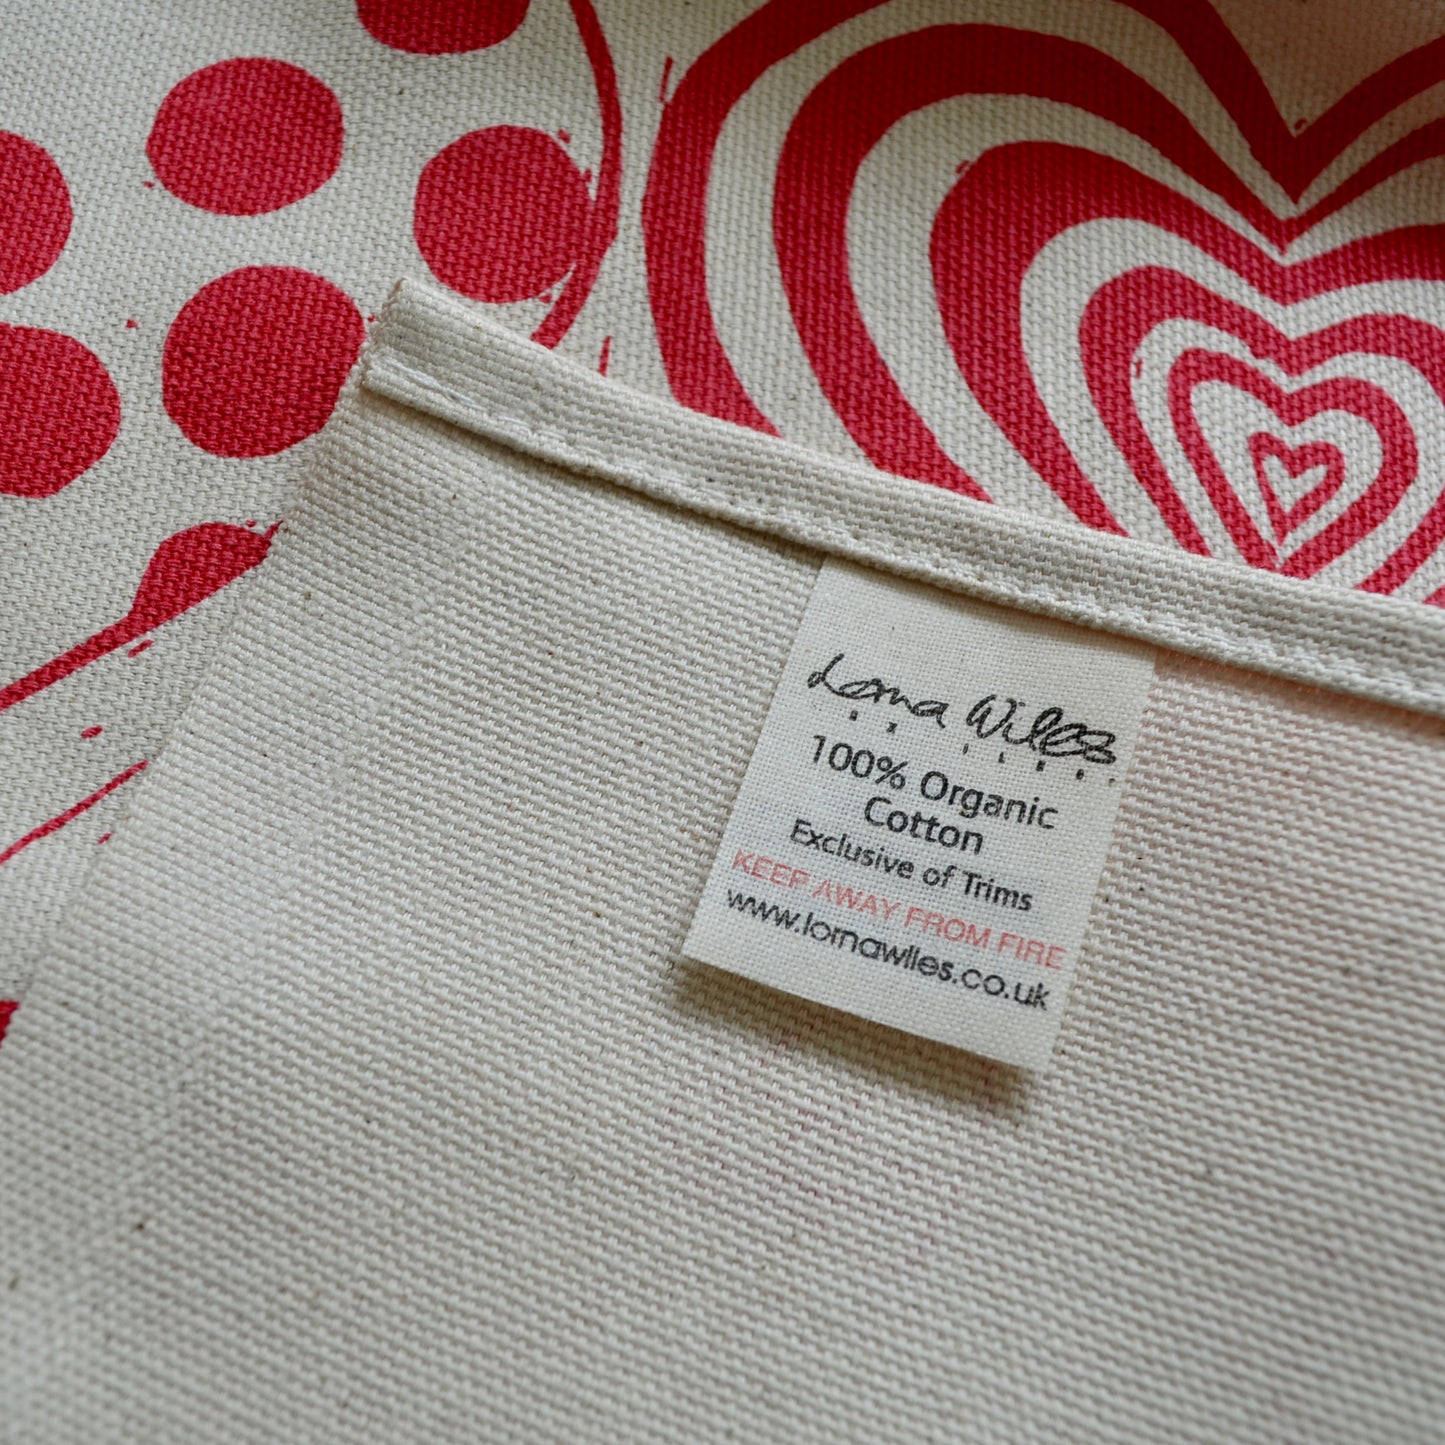 ***NEW PRODUCT*** "Sending Love" Organic cotton tea-towel